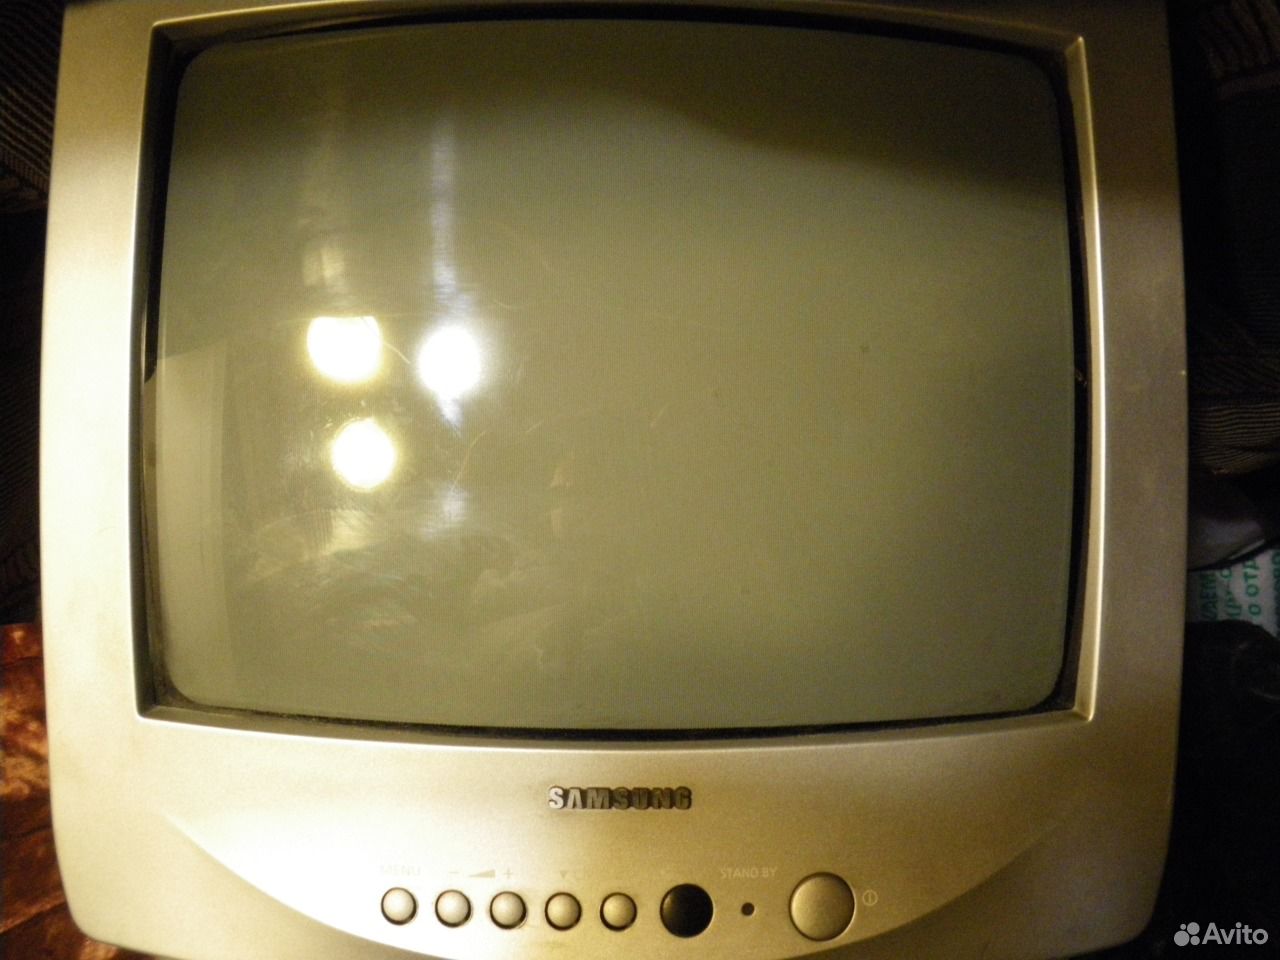 Авито екатеринбург телевизор. Маленький телевизор. Телевизор Samsung маленький. Телевизор самсунг маленький старый. Старый телевизор самсунг 2000.